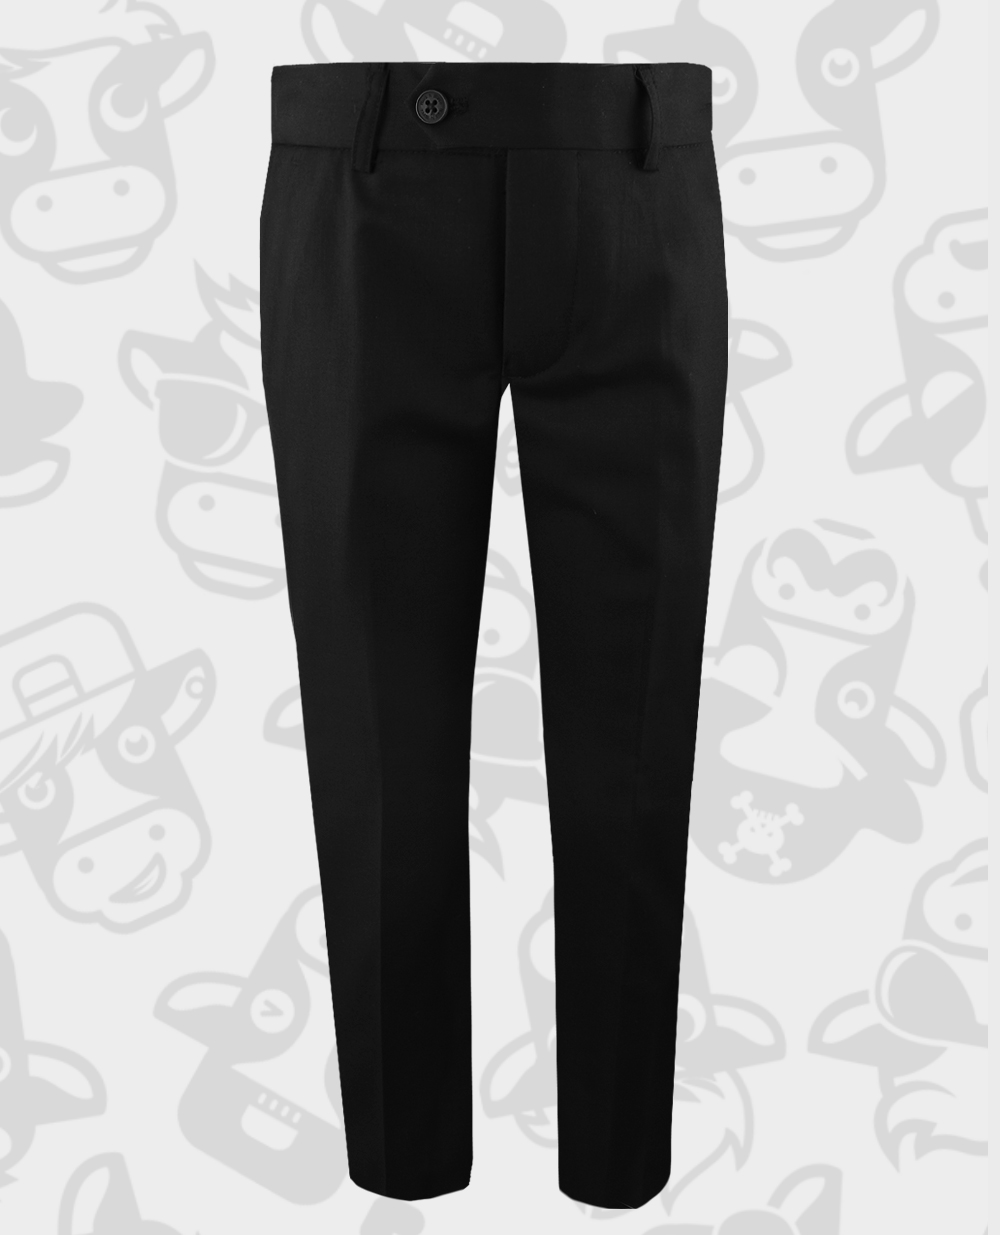 Boys New Slimbridge Slim Fit Contemporary School Trousers Black  Michael  Sehgal and Sons Ltd  Buy School Uniform for Boys and Girls